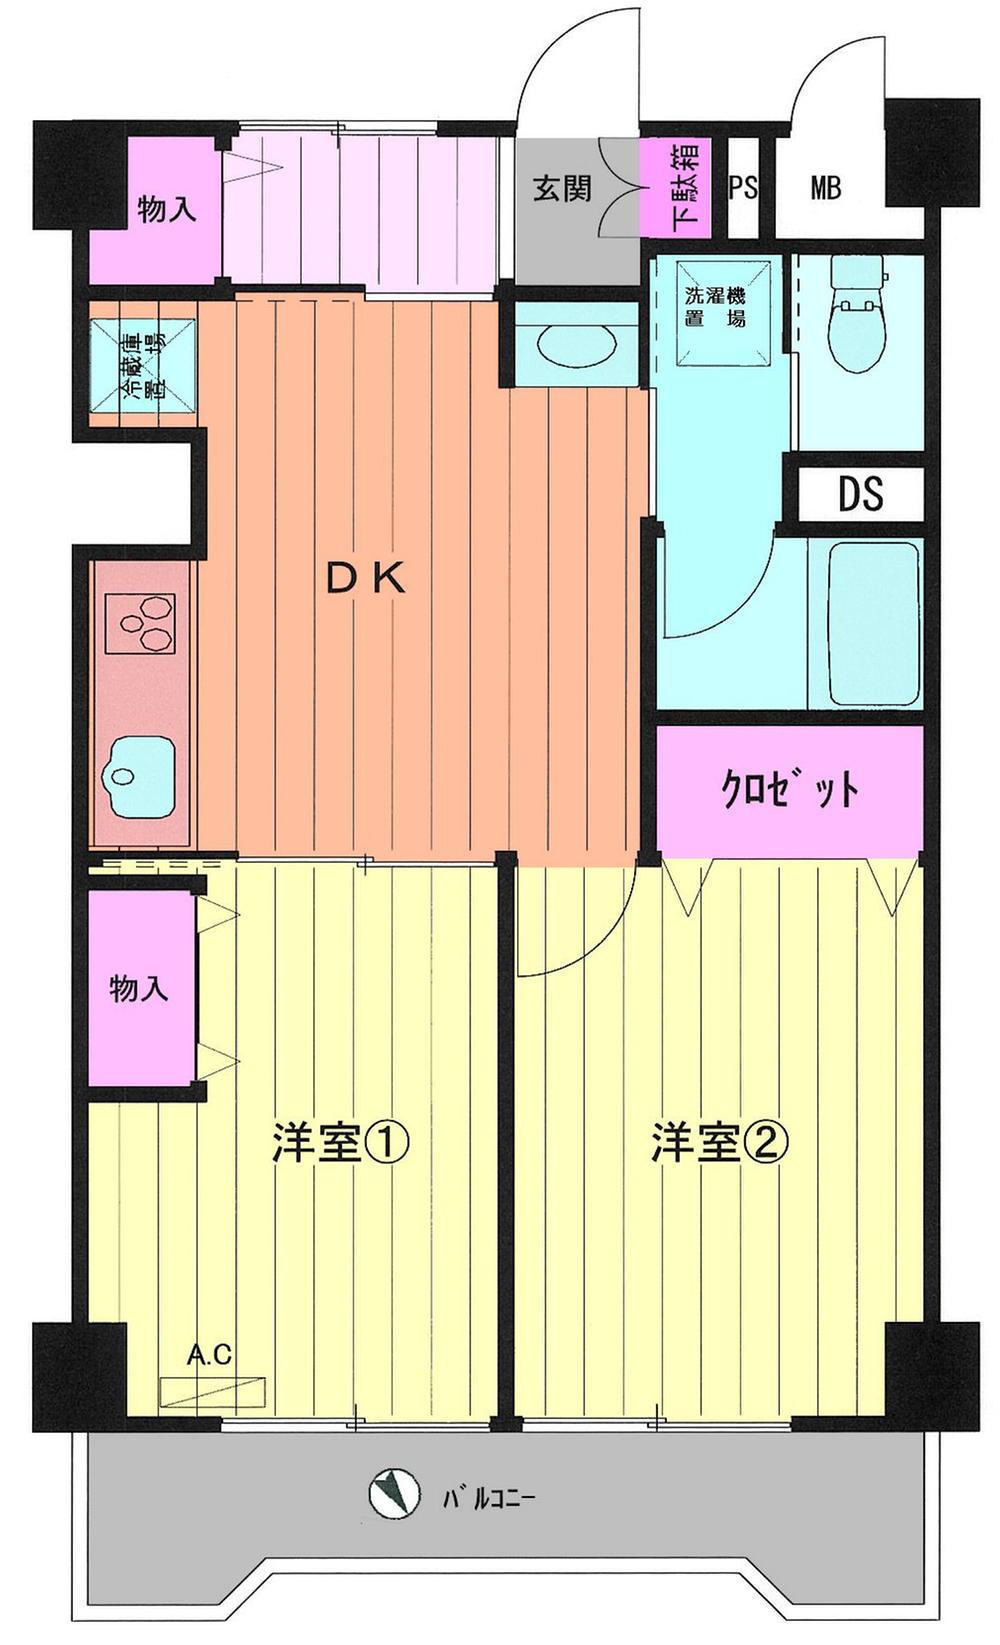 Floor plan. 2DK, Price 15.8 million yen, Occupied area 45.36 sq m , Balcony area 5.12 sq m Floor